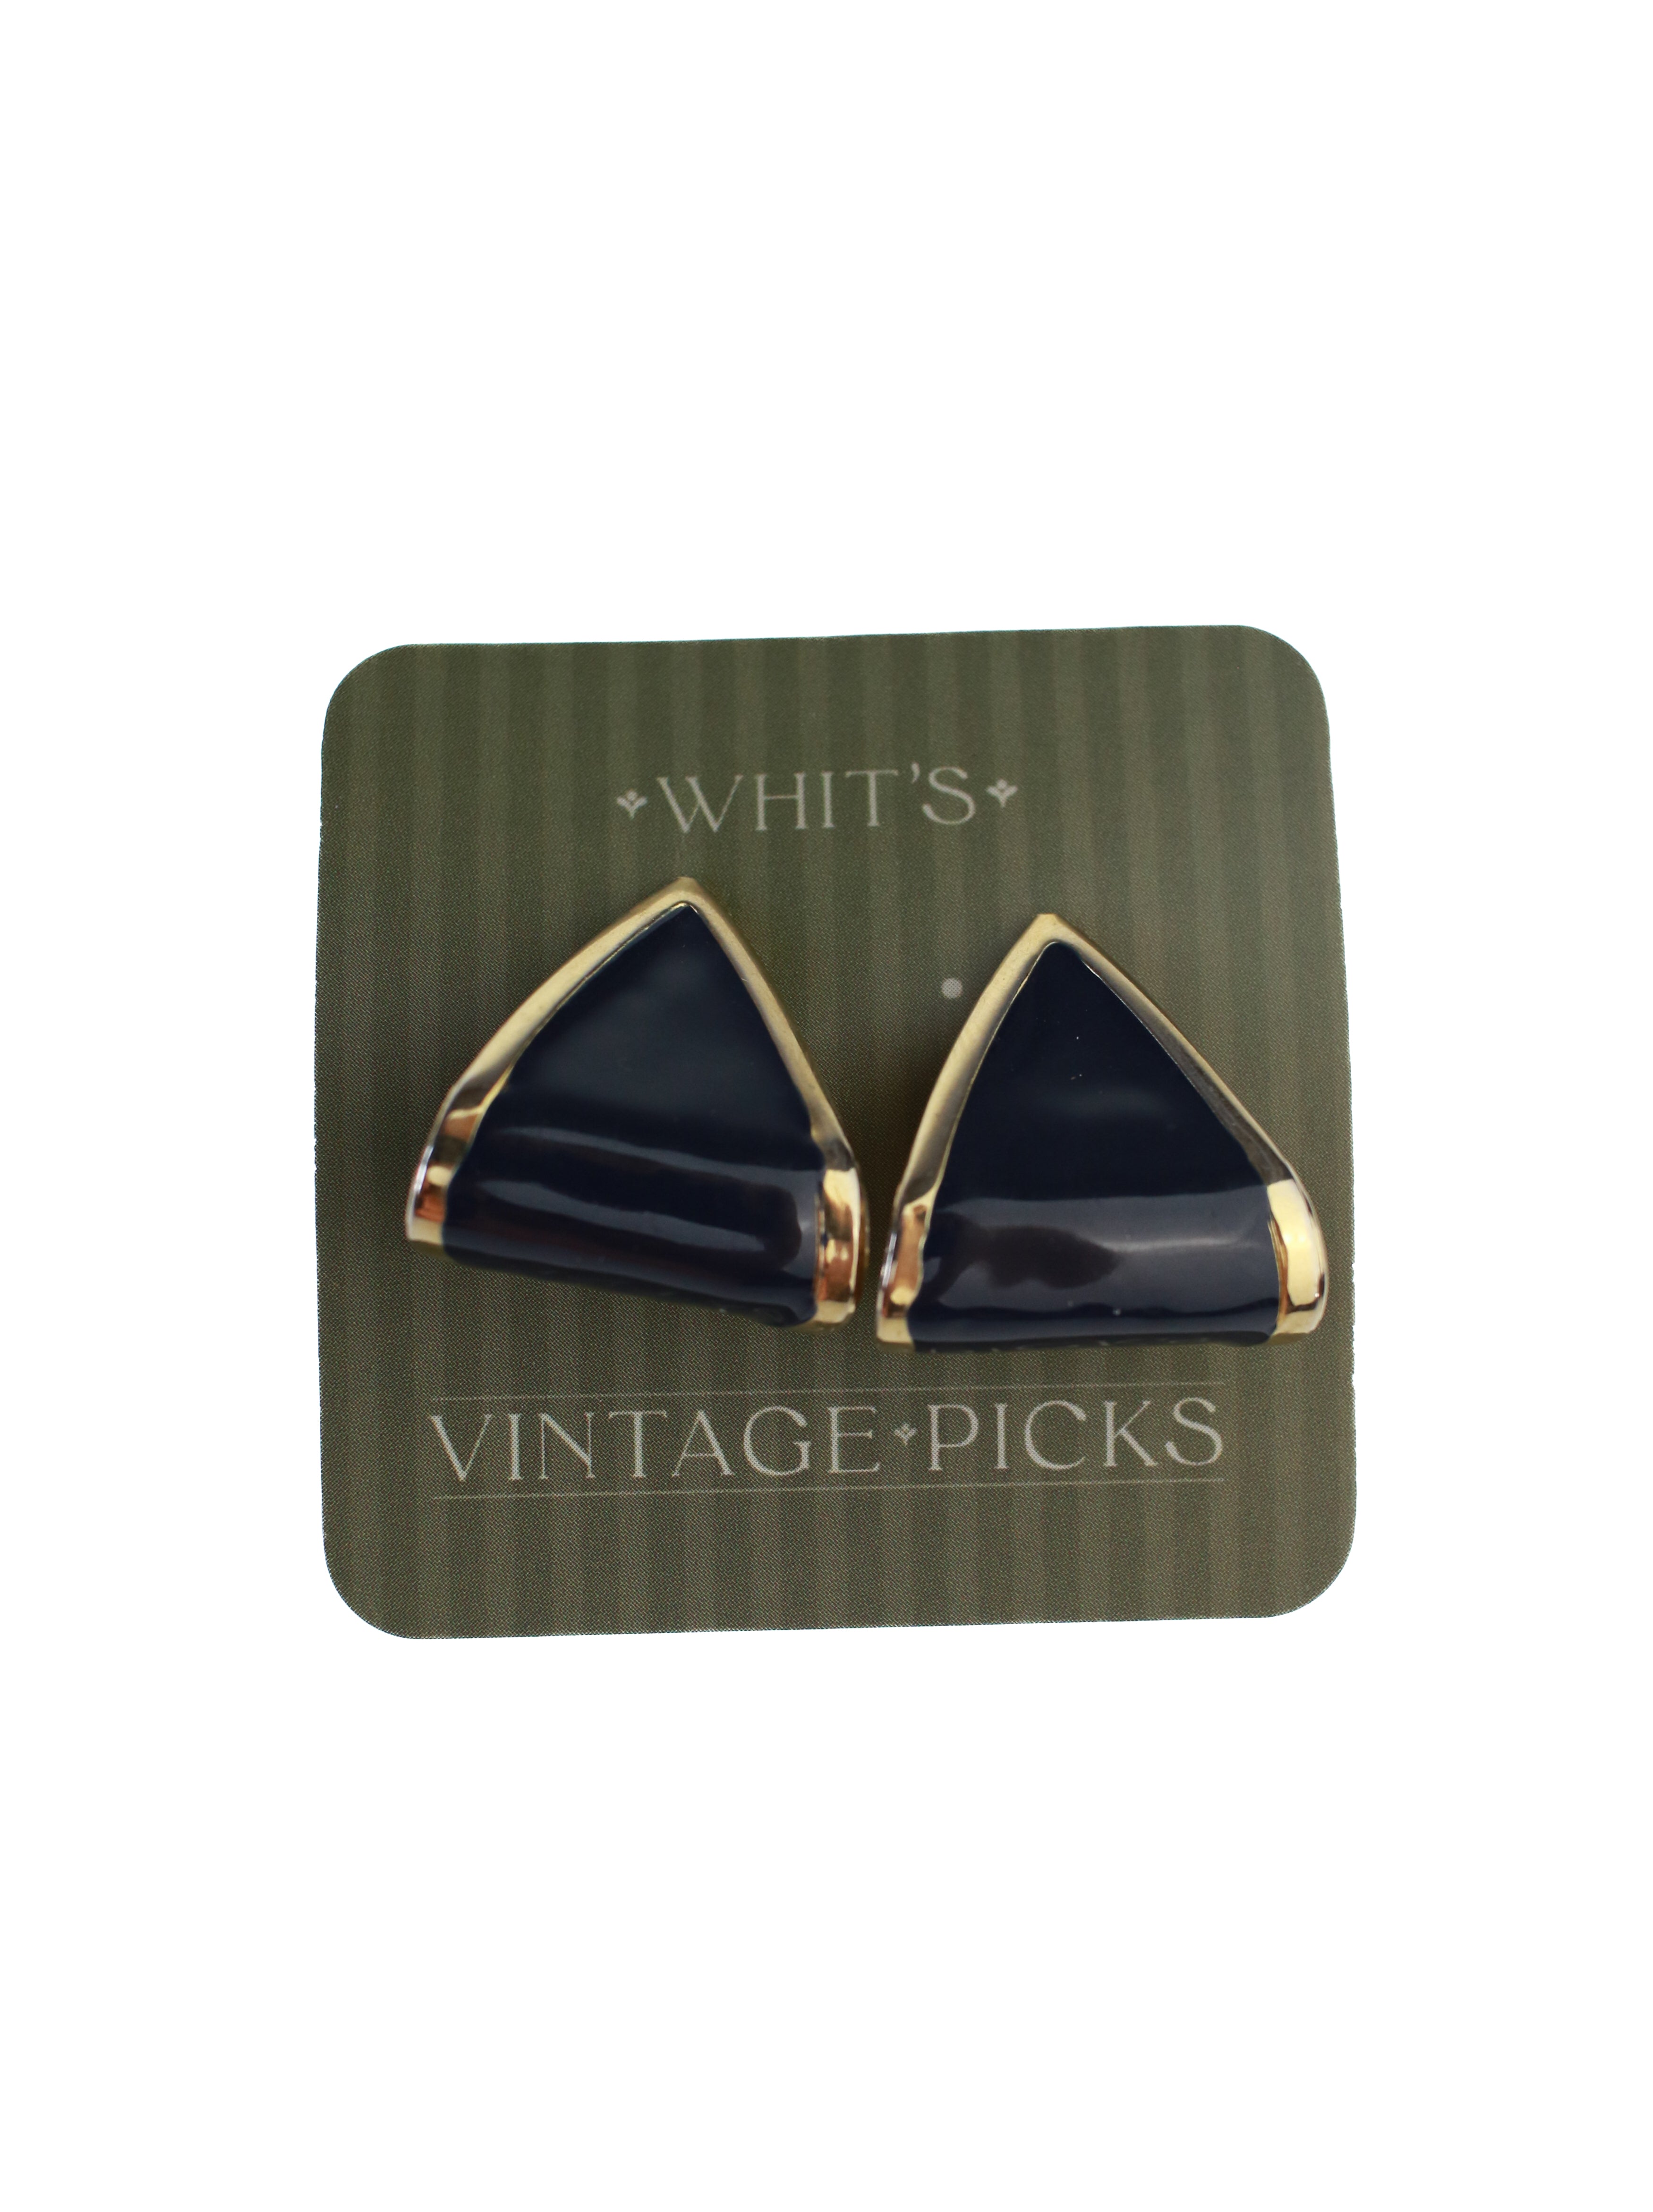 Whit's Vintage Picks- Earrings 68